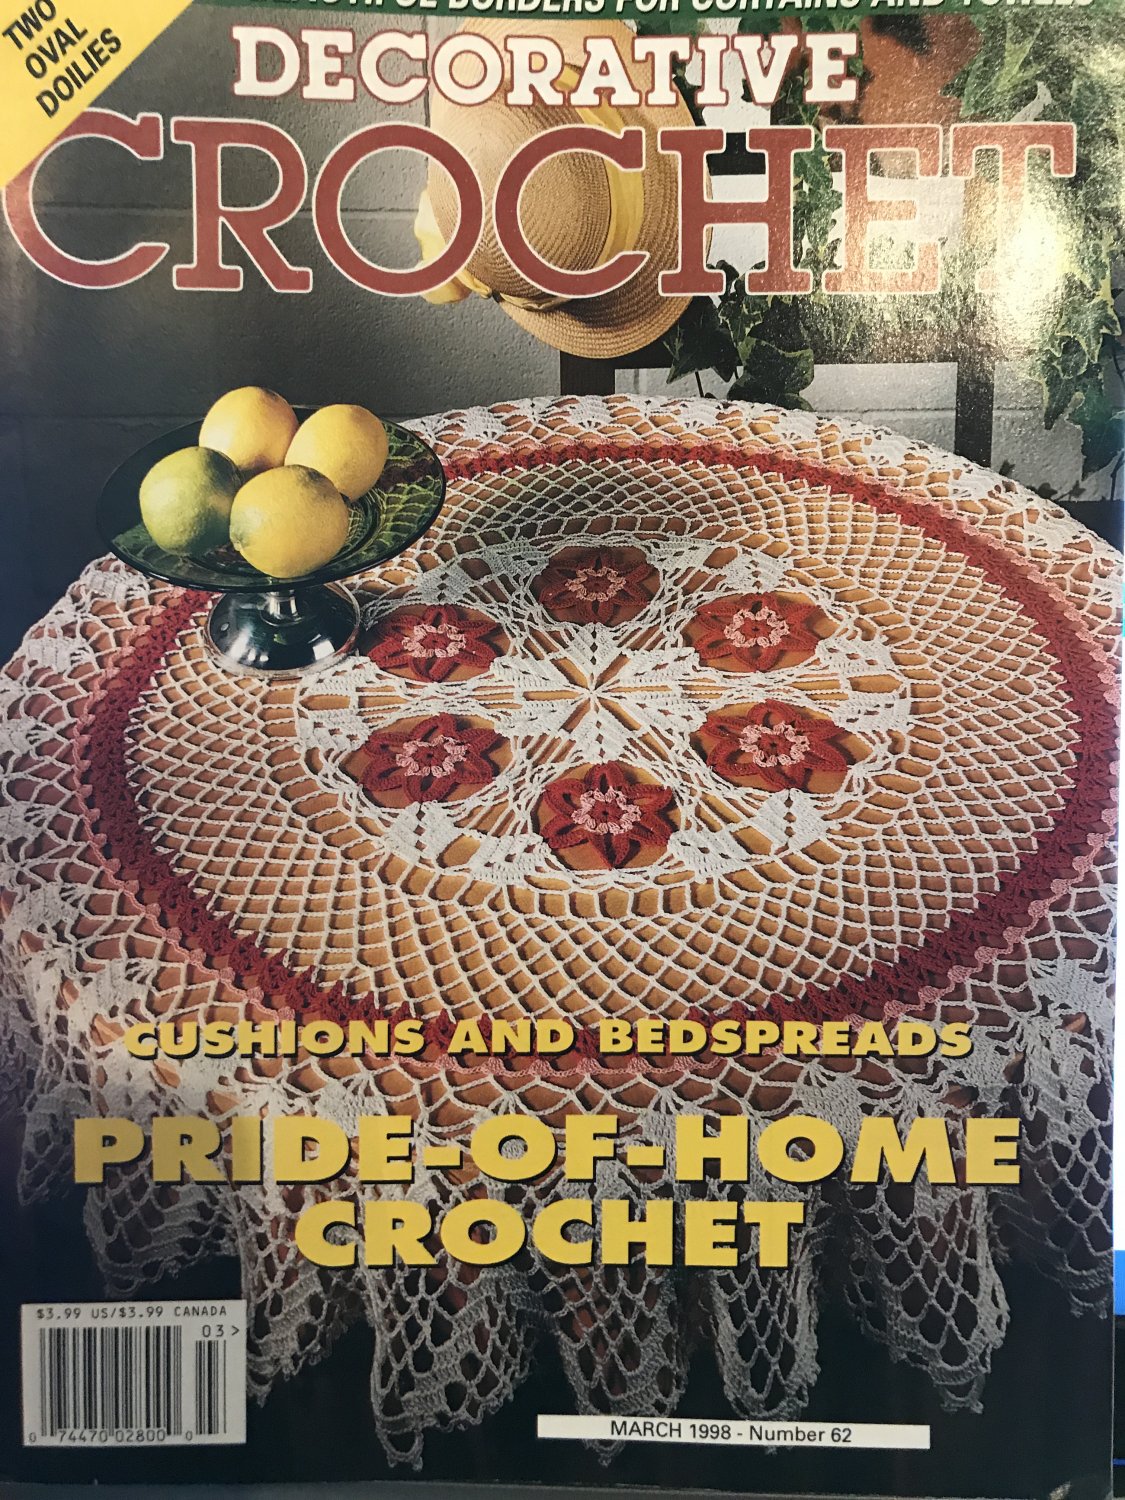 Decorative Crochet Magazine 62 March 1998  Doilies, Cushions and bedspread thread crochet